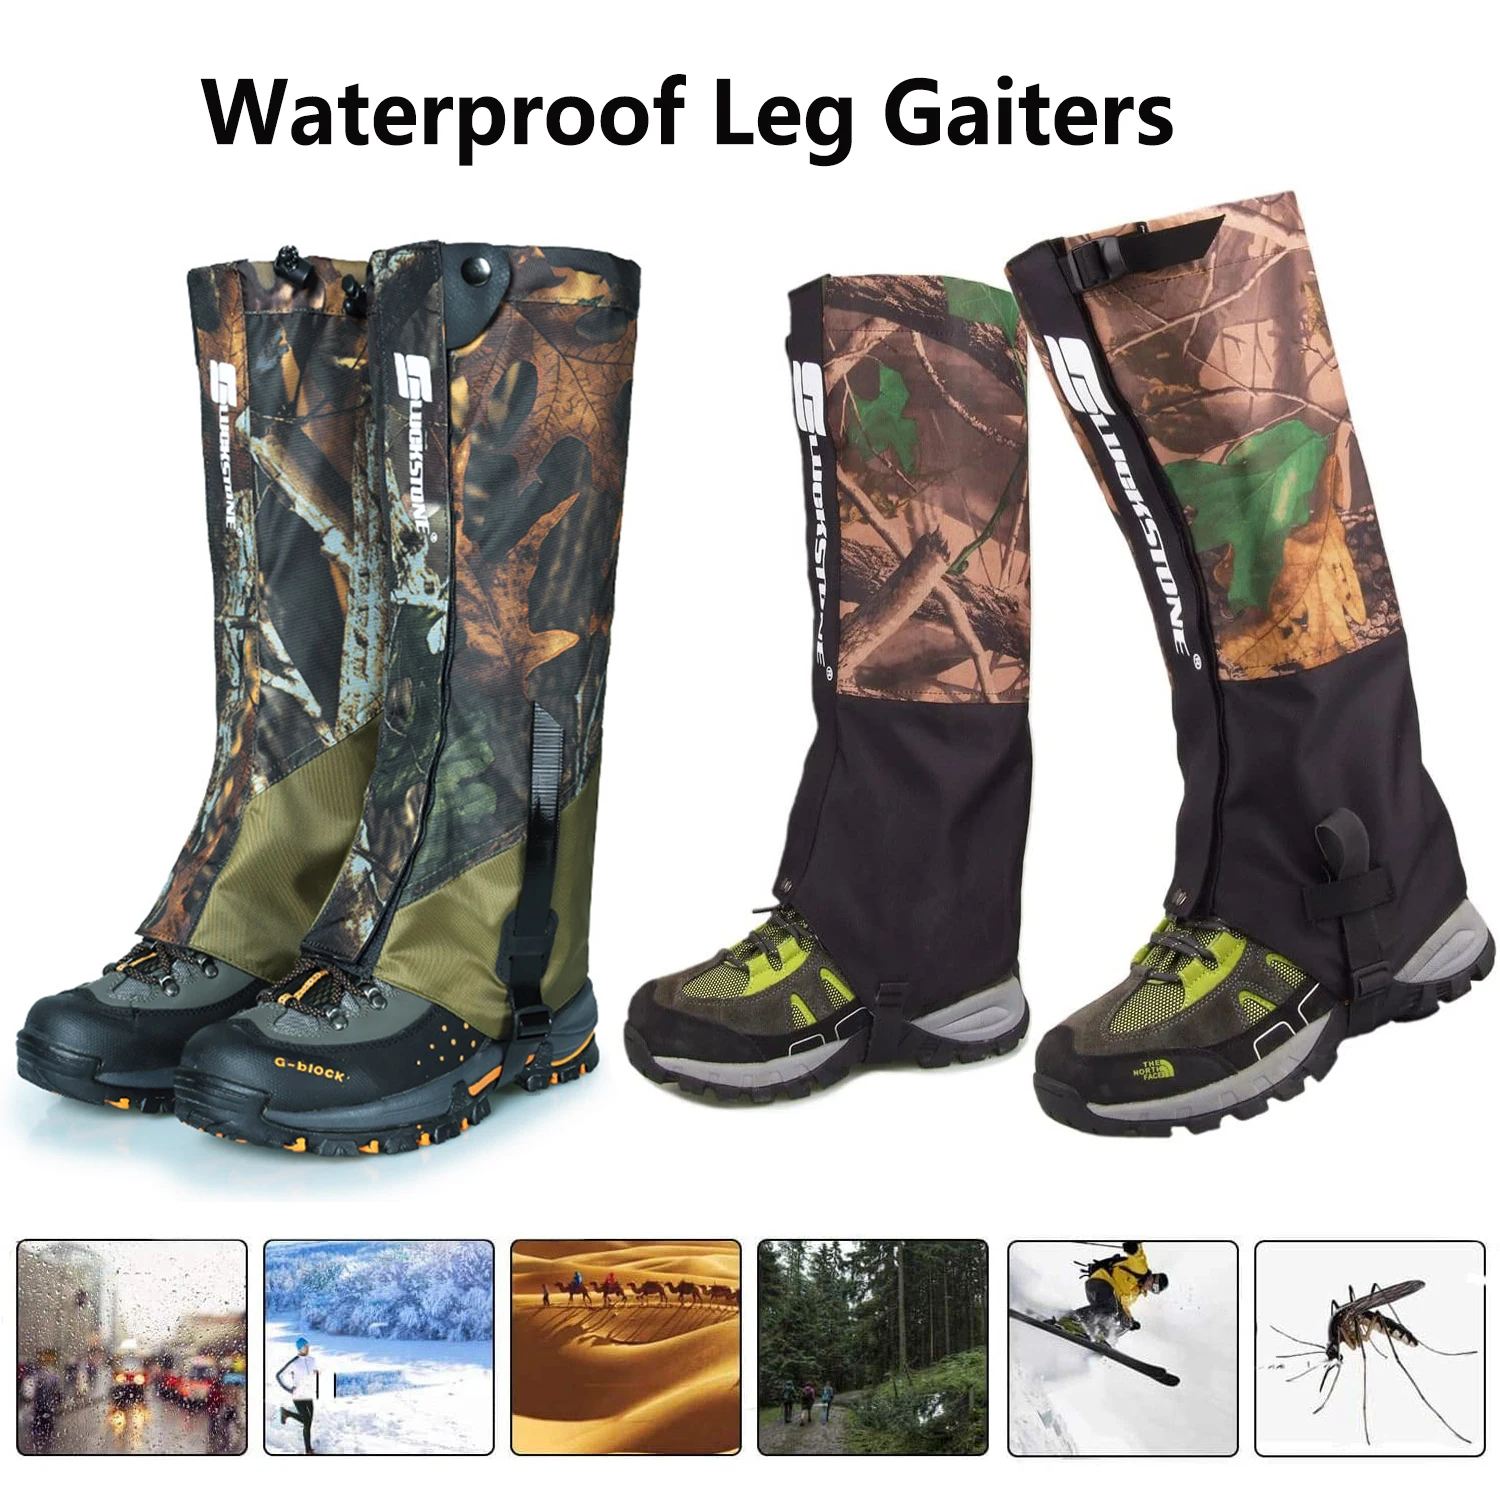 Waterproof Snow Leg Gaiters Hiking Boot Shoes Legging Gaiters Warmer Cover for Camping Trekking Climbing Hunting Snowshoeing